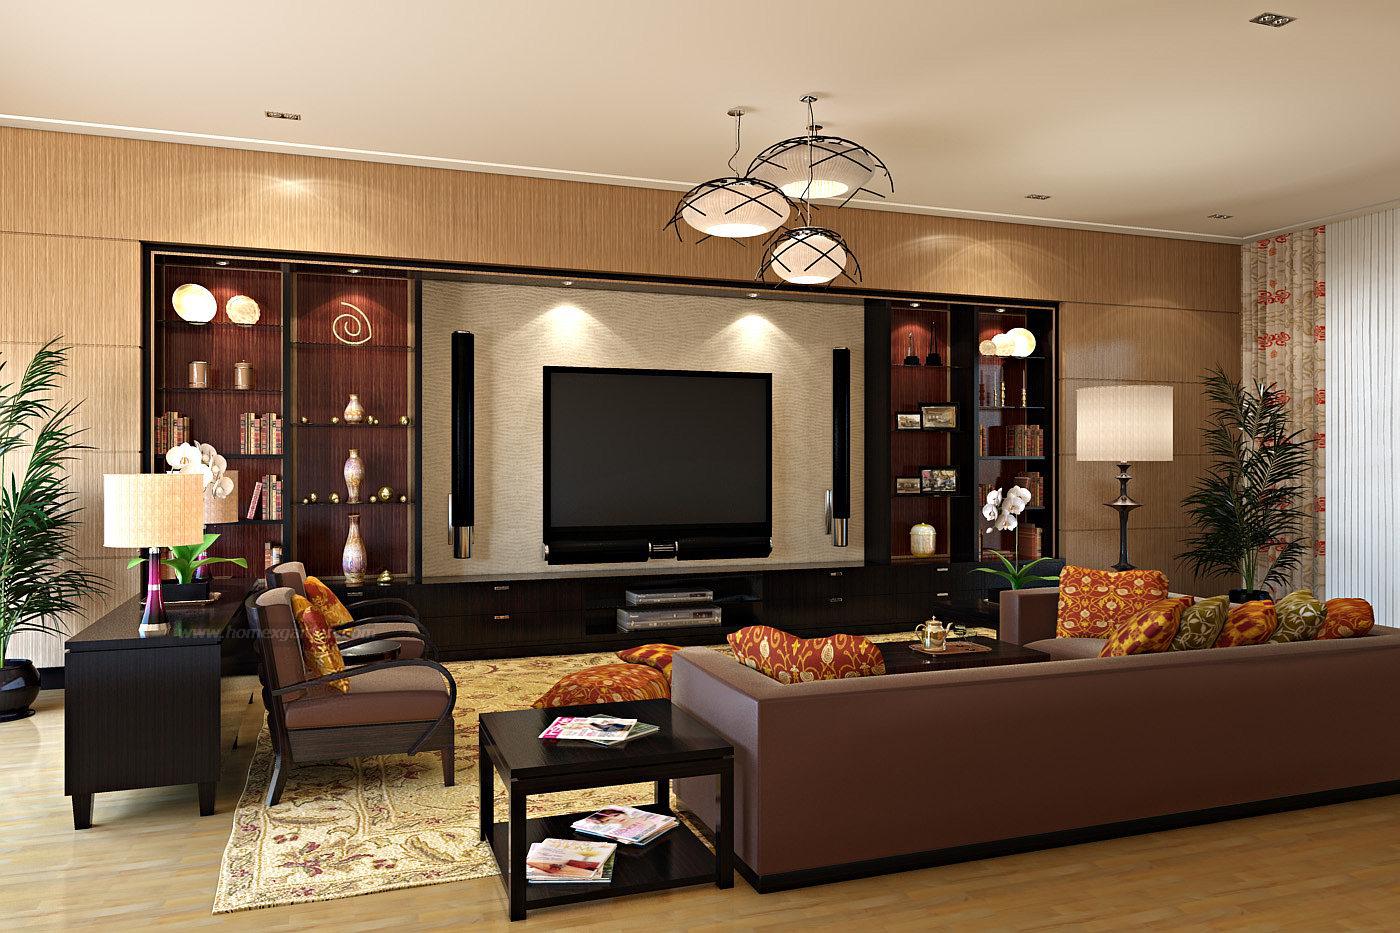 Cozy Home Decor Accessories Tildeoaklandcom 10 Simple Ways To Awaken And Interior home interior decorating ideas